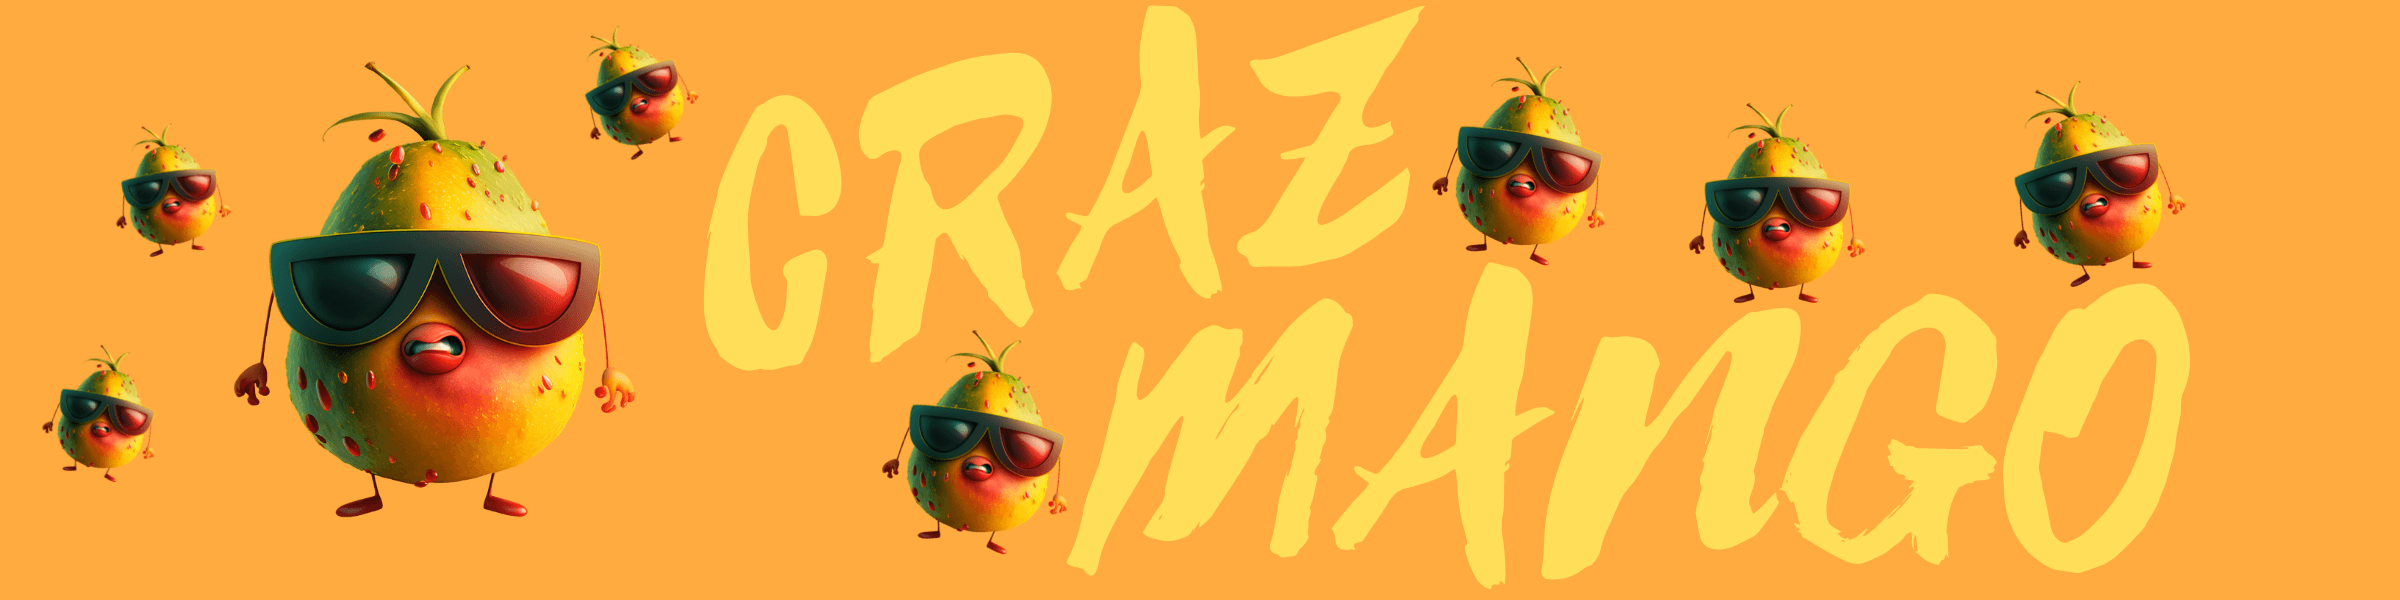 craz-mango banner